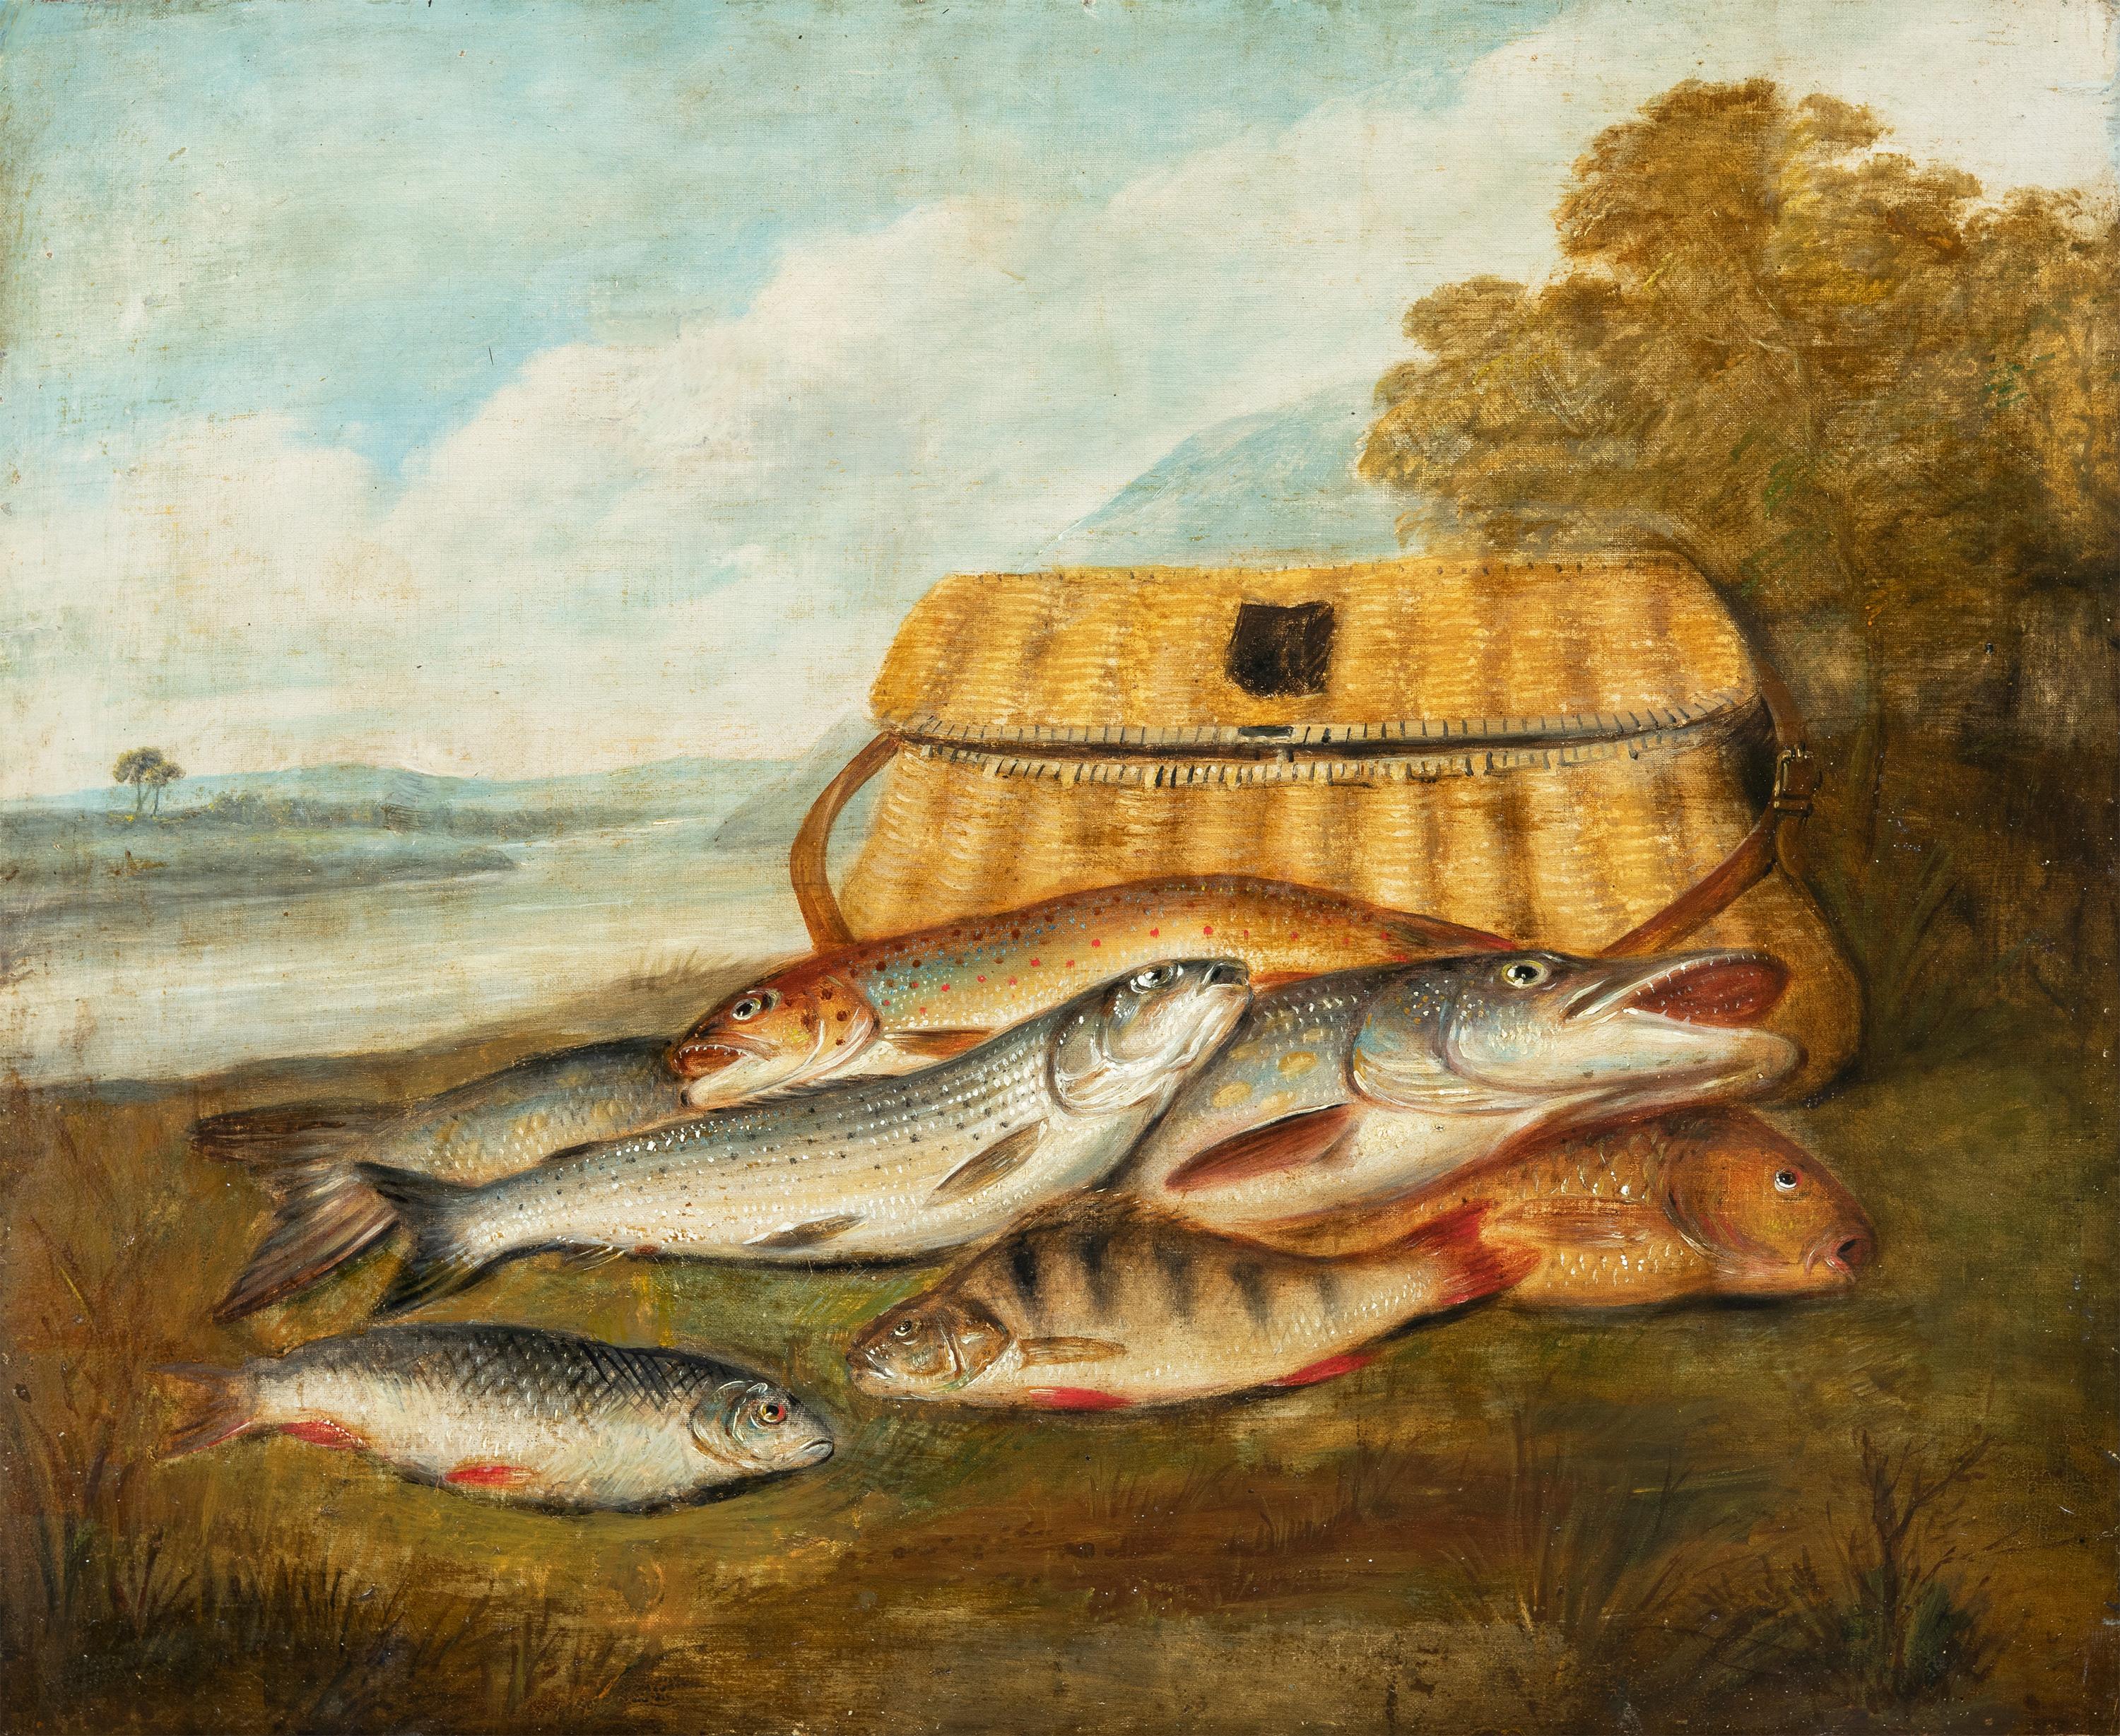 Naturalist painter (Dutch school) - 19th century Still life painting - Fish